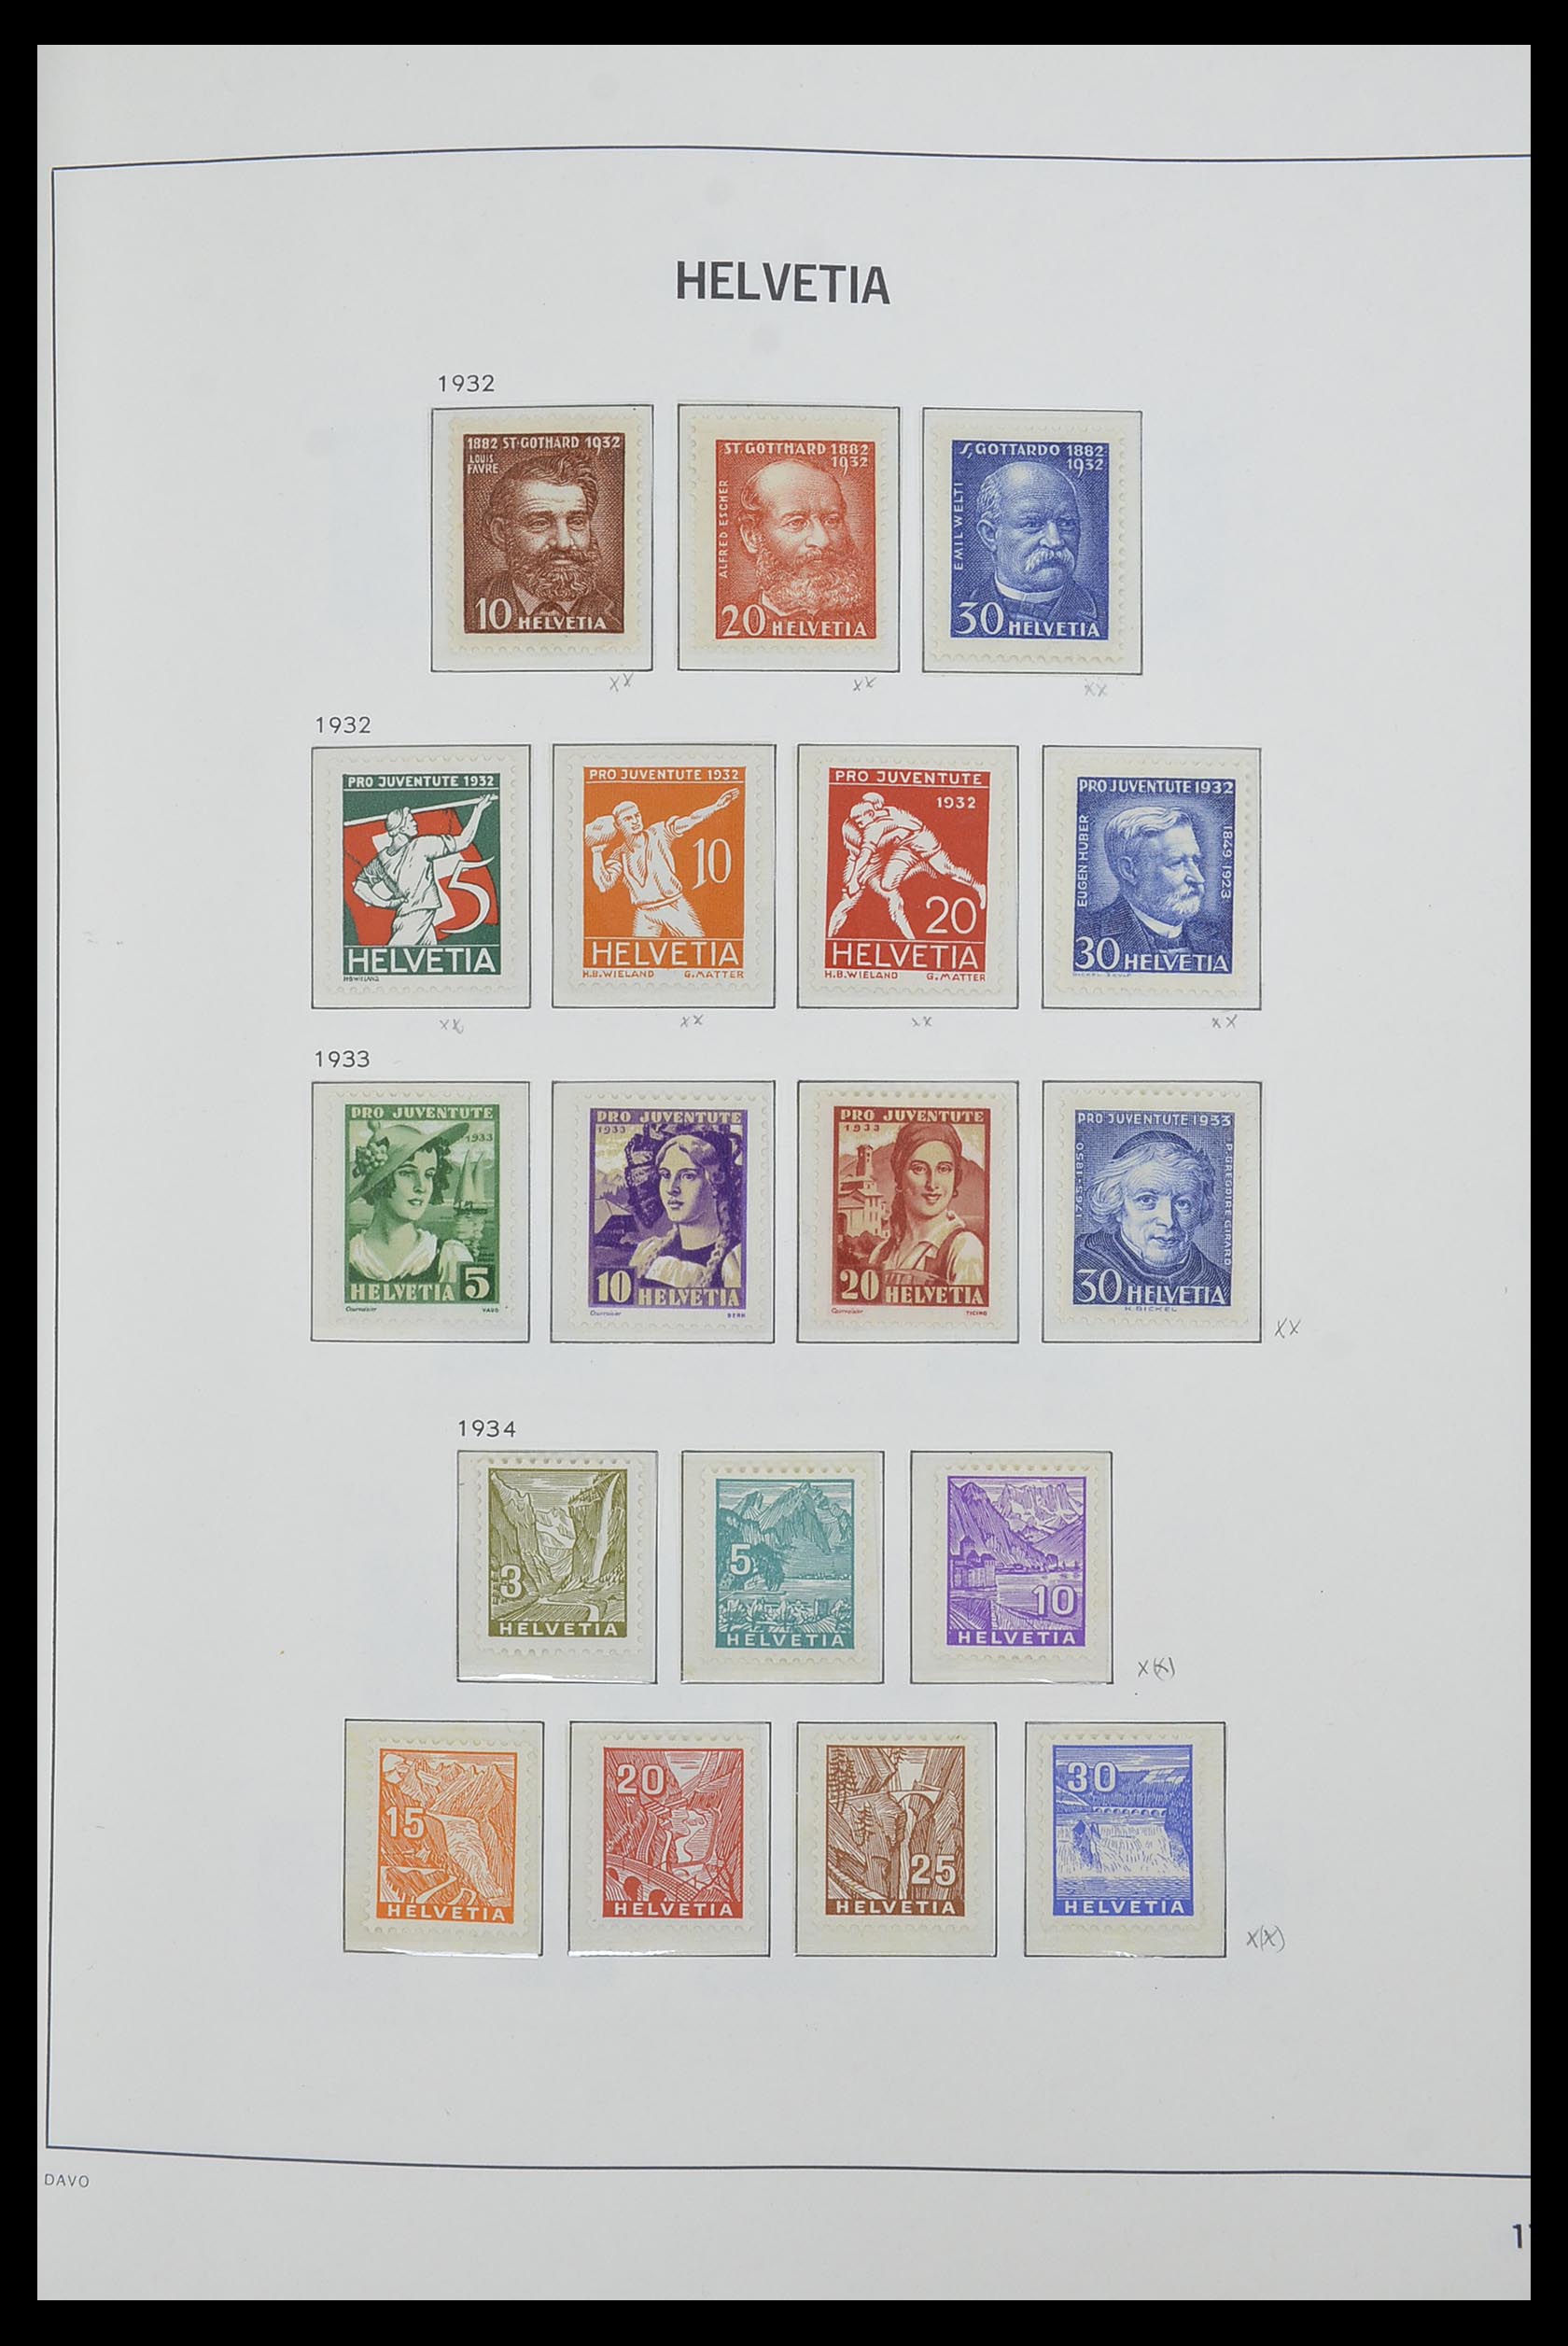 33556 017 - Stamp collection 33556 Switzerland 1862-2000.